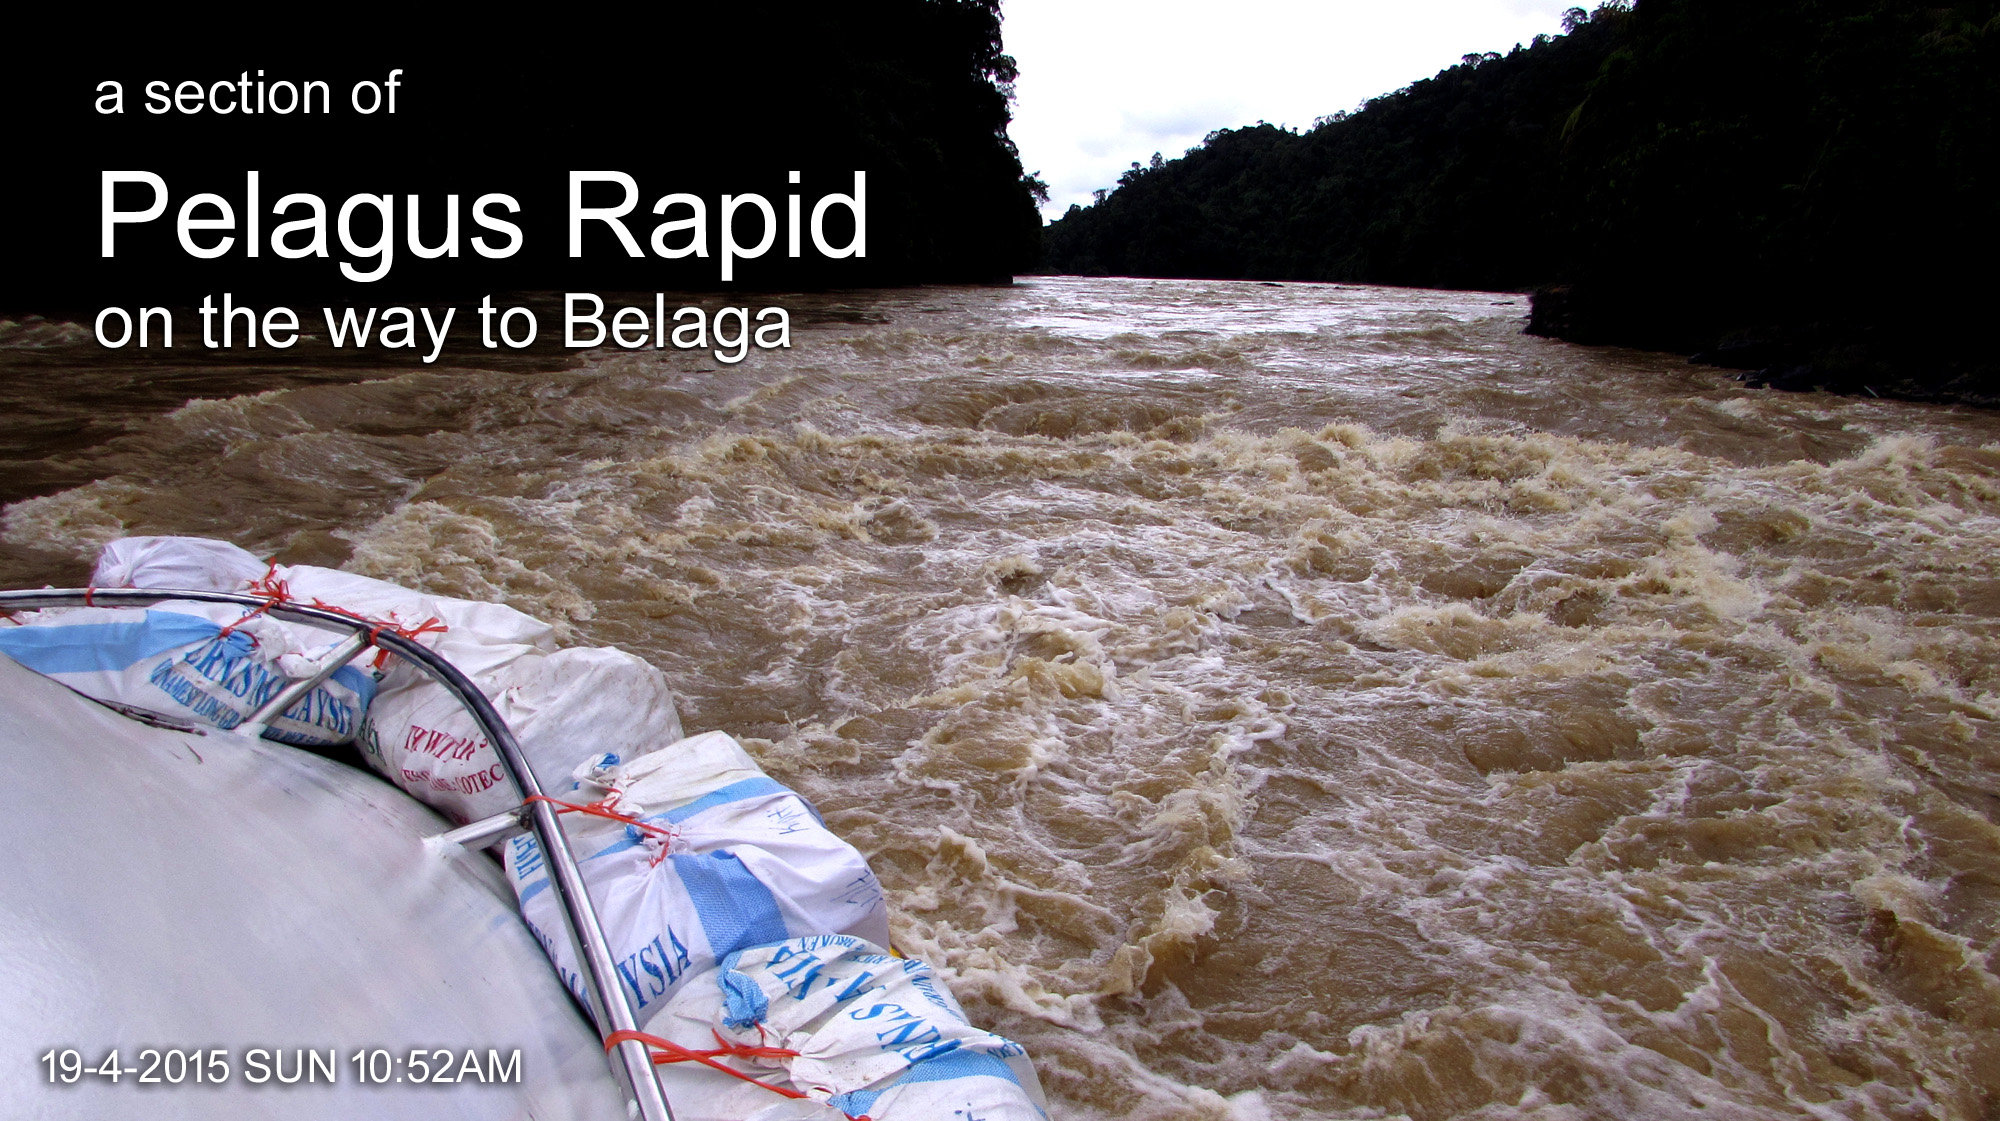 Pelagus Rapid on the way to Belaga